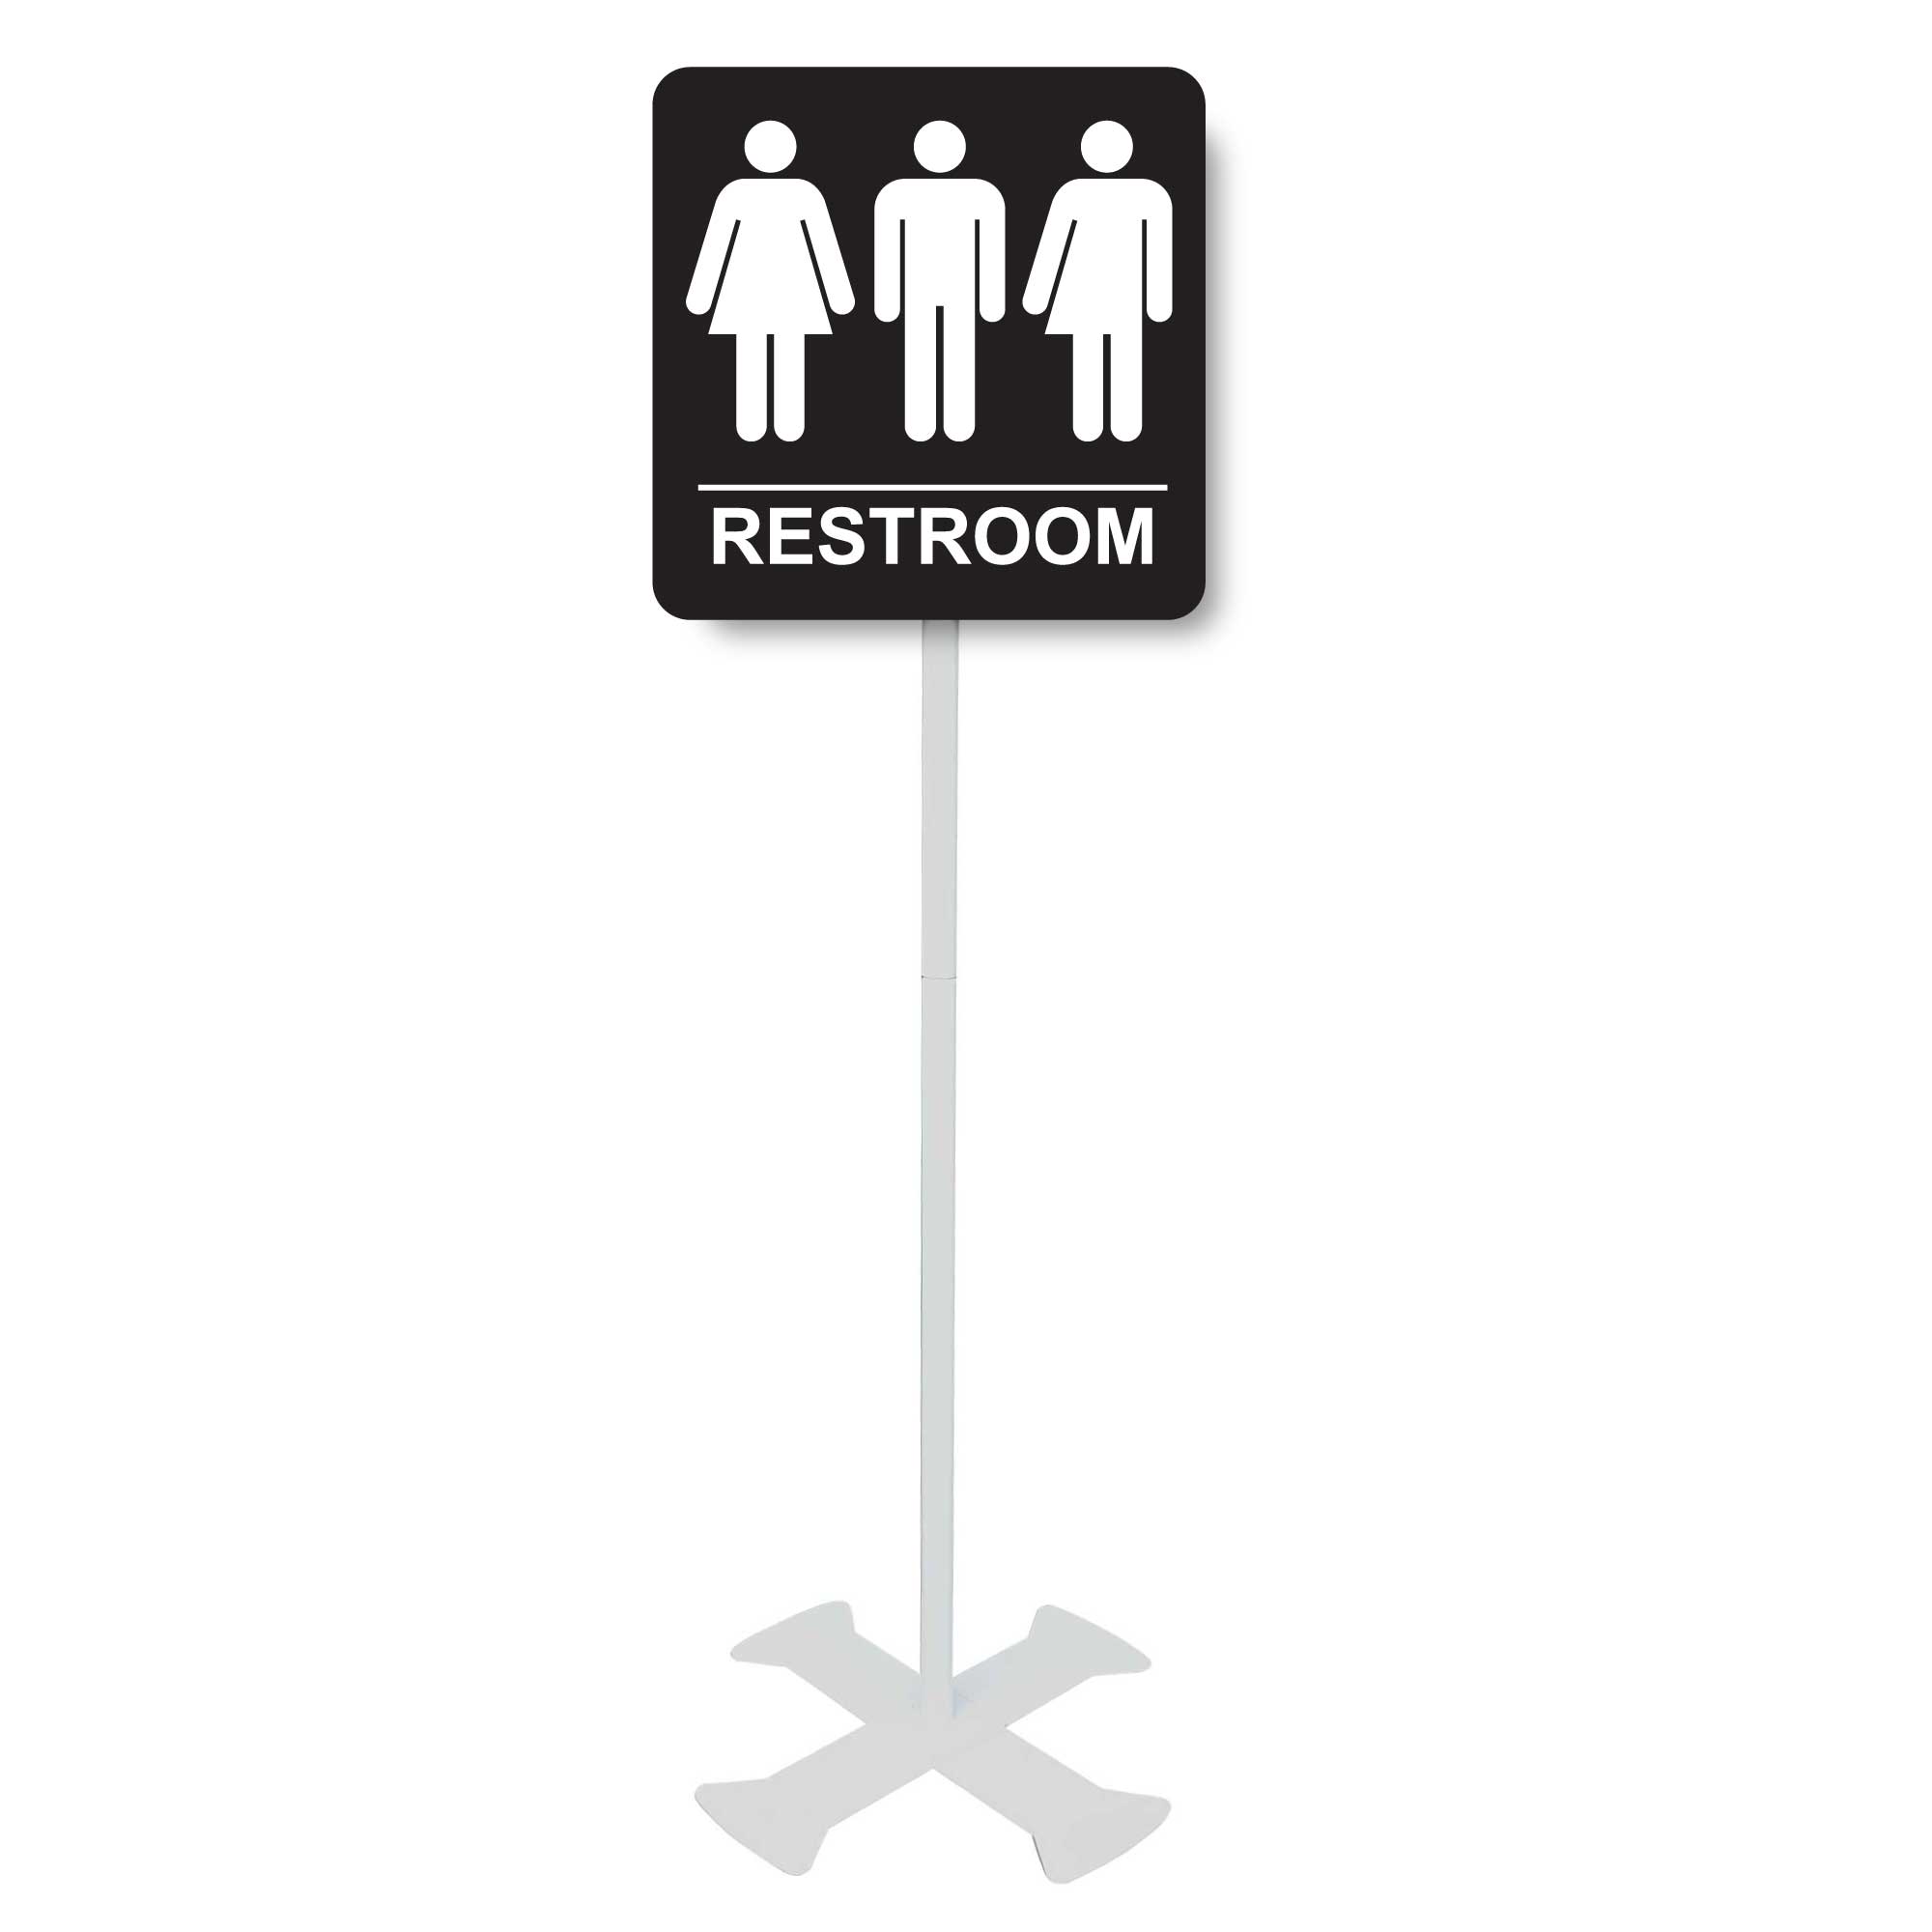 gender bathroom symbols